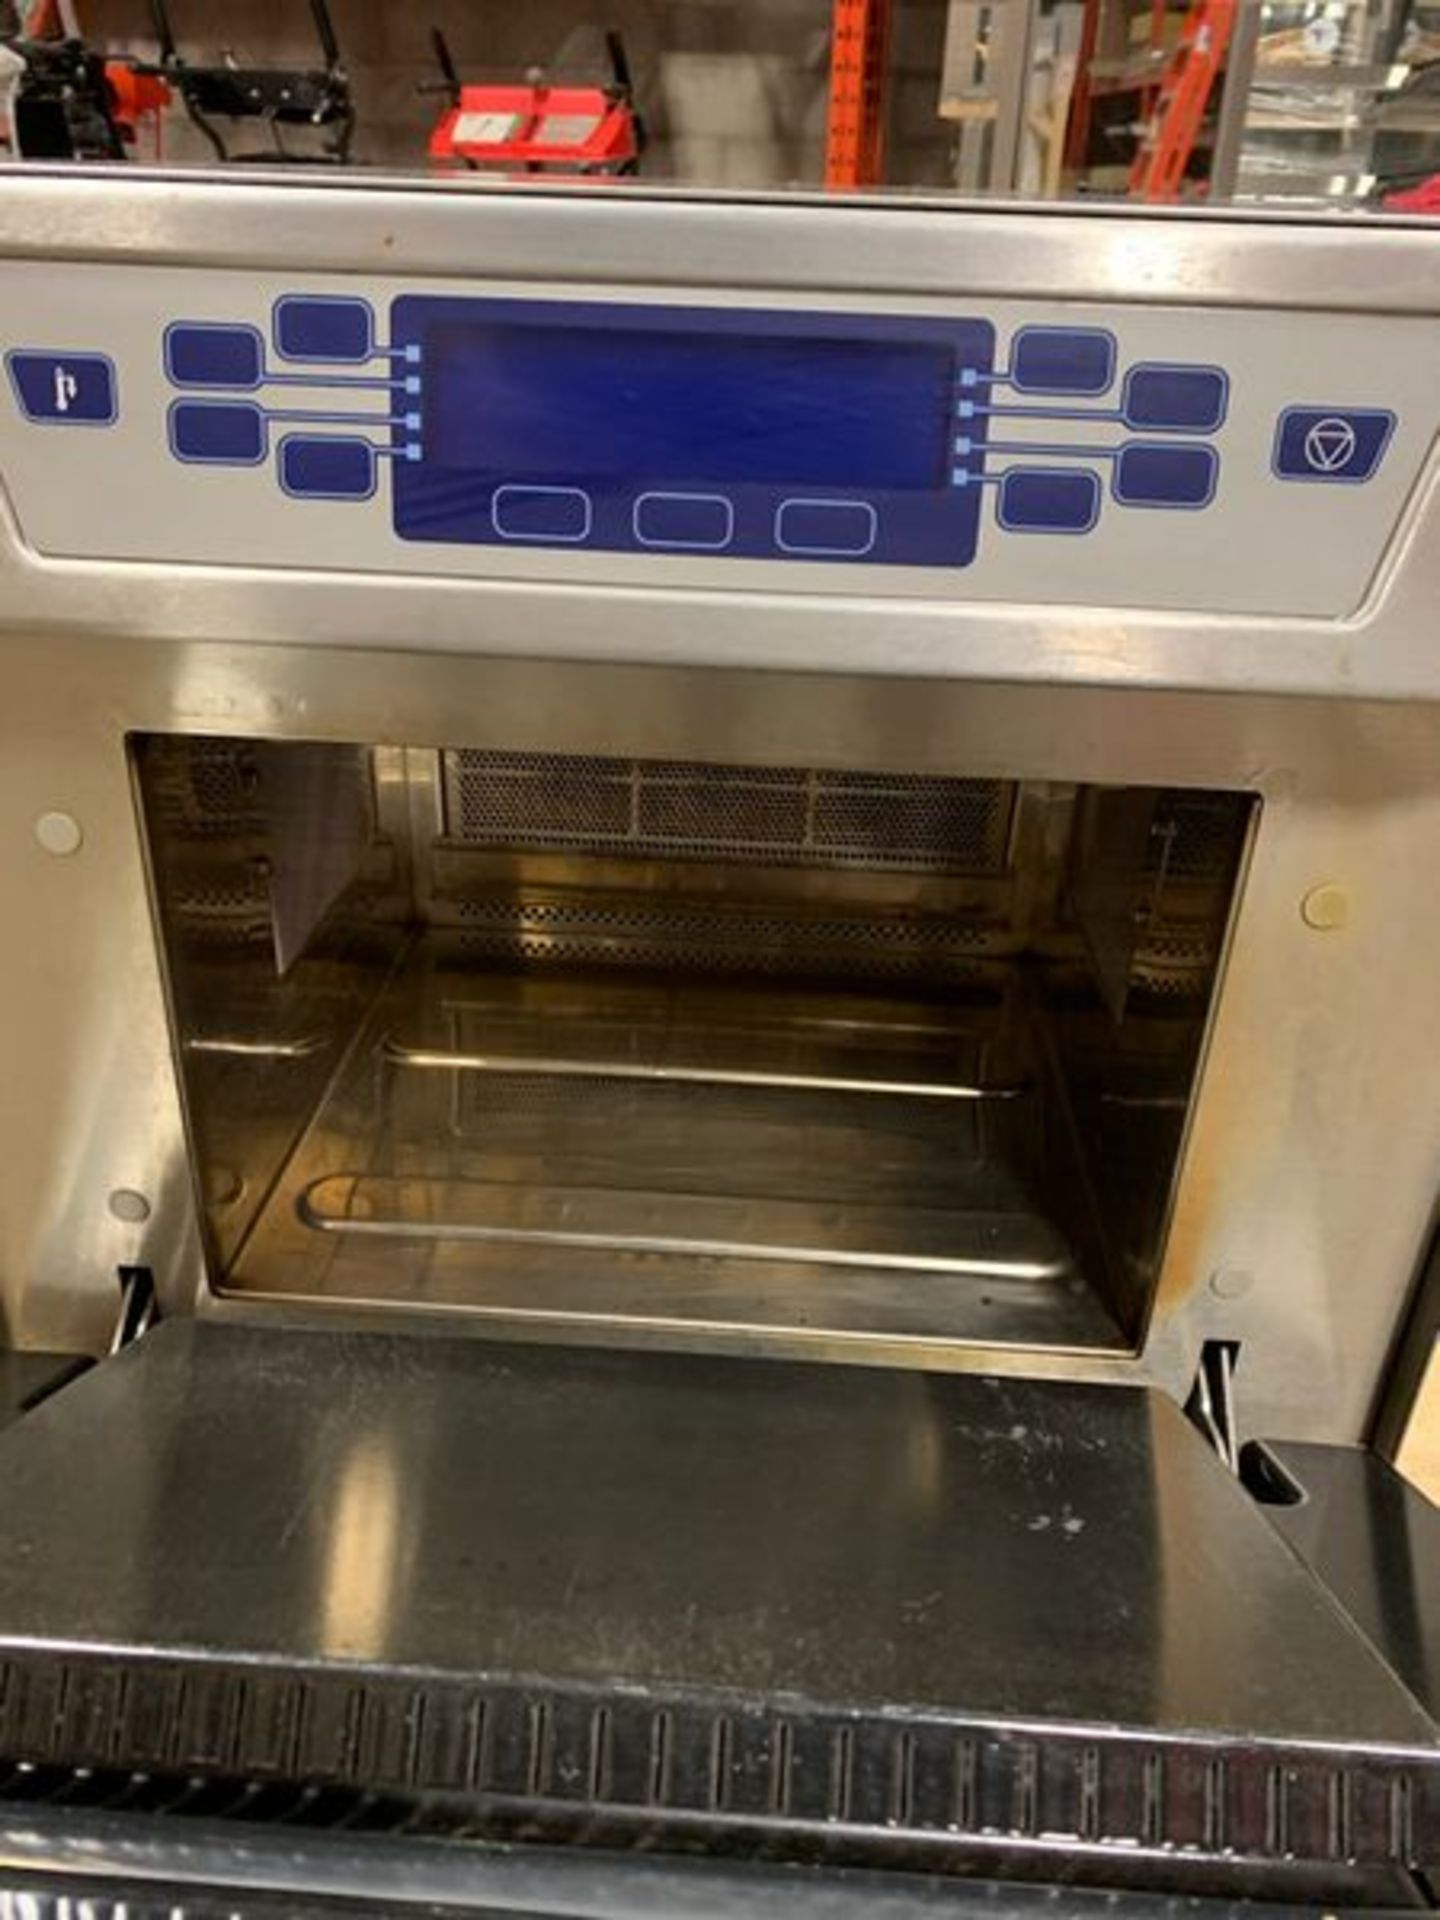 Merrychef 402S Rapid Cook Oven - Image 2 of 2